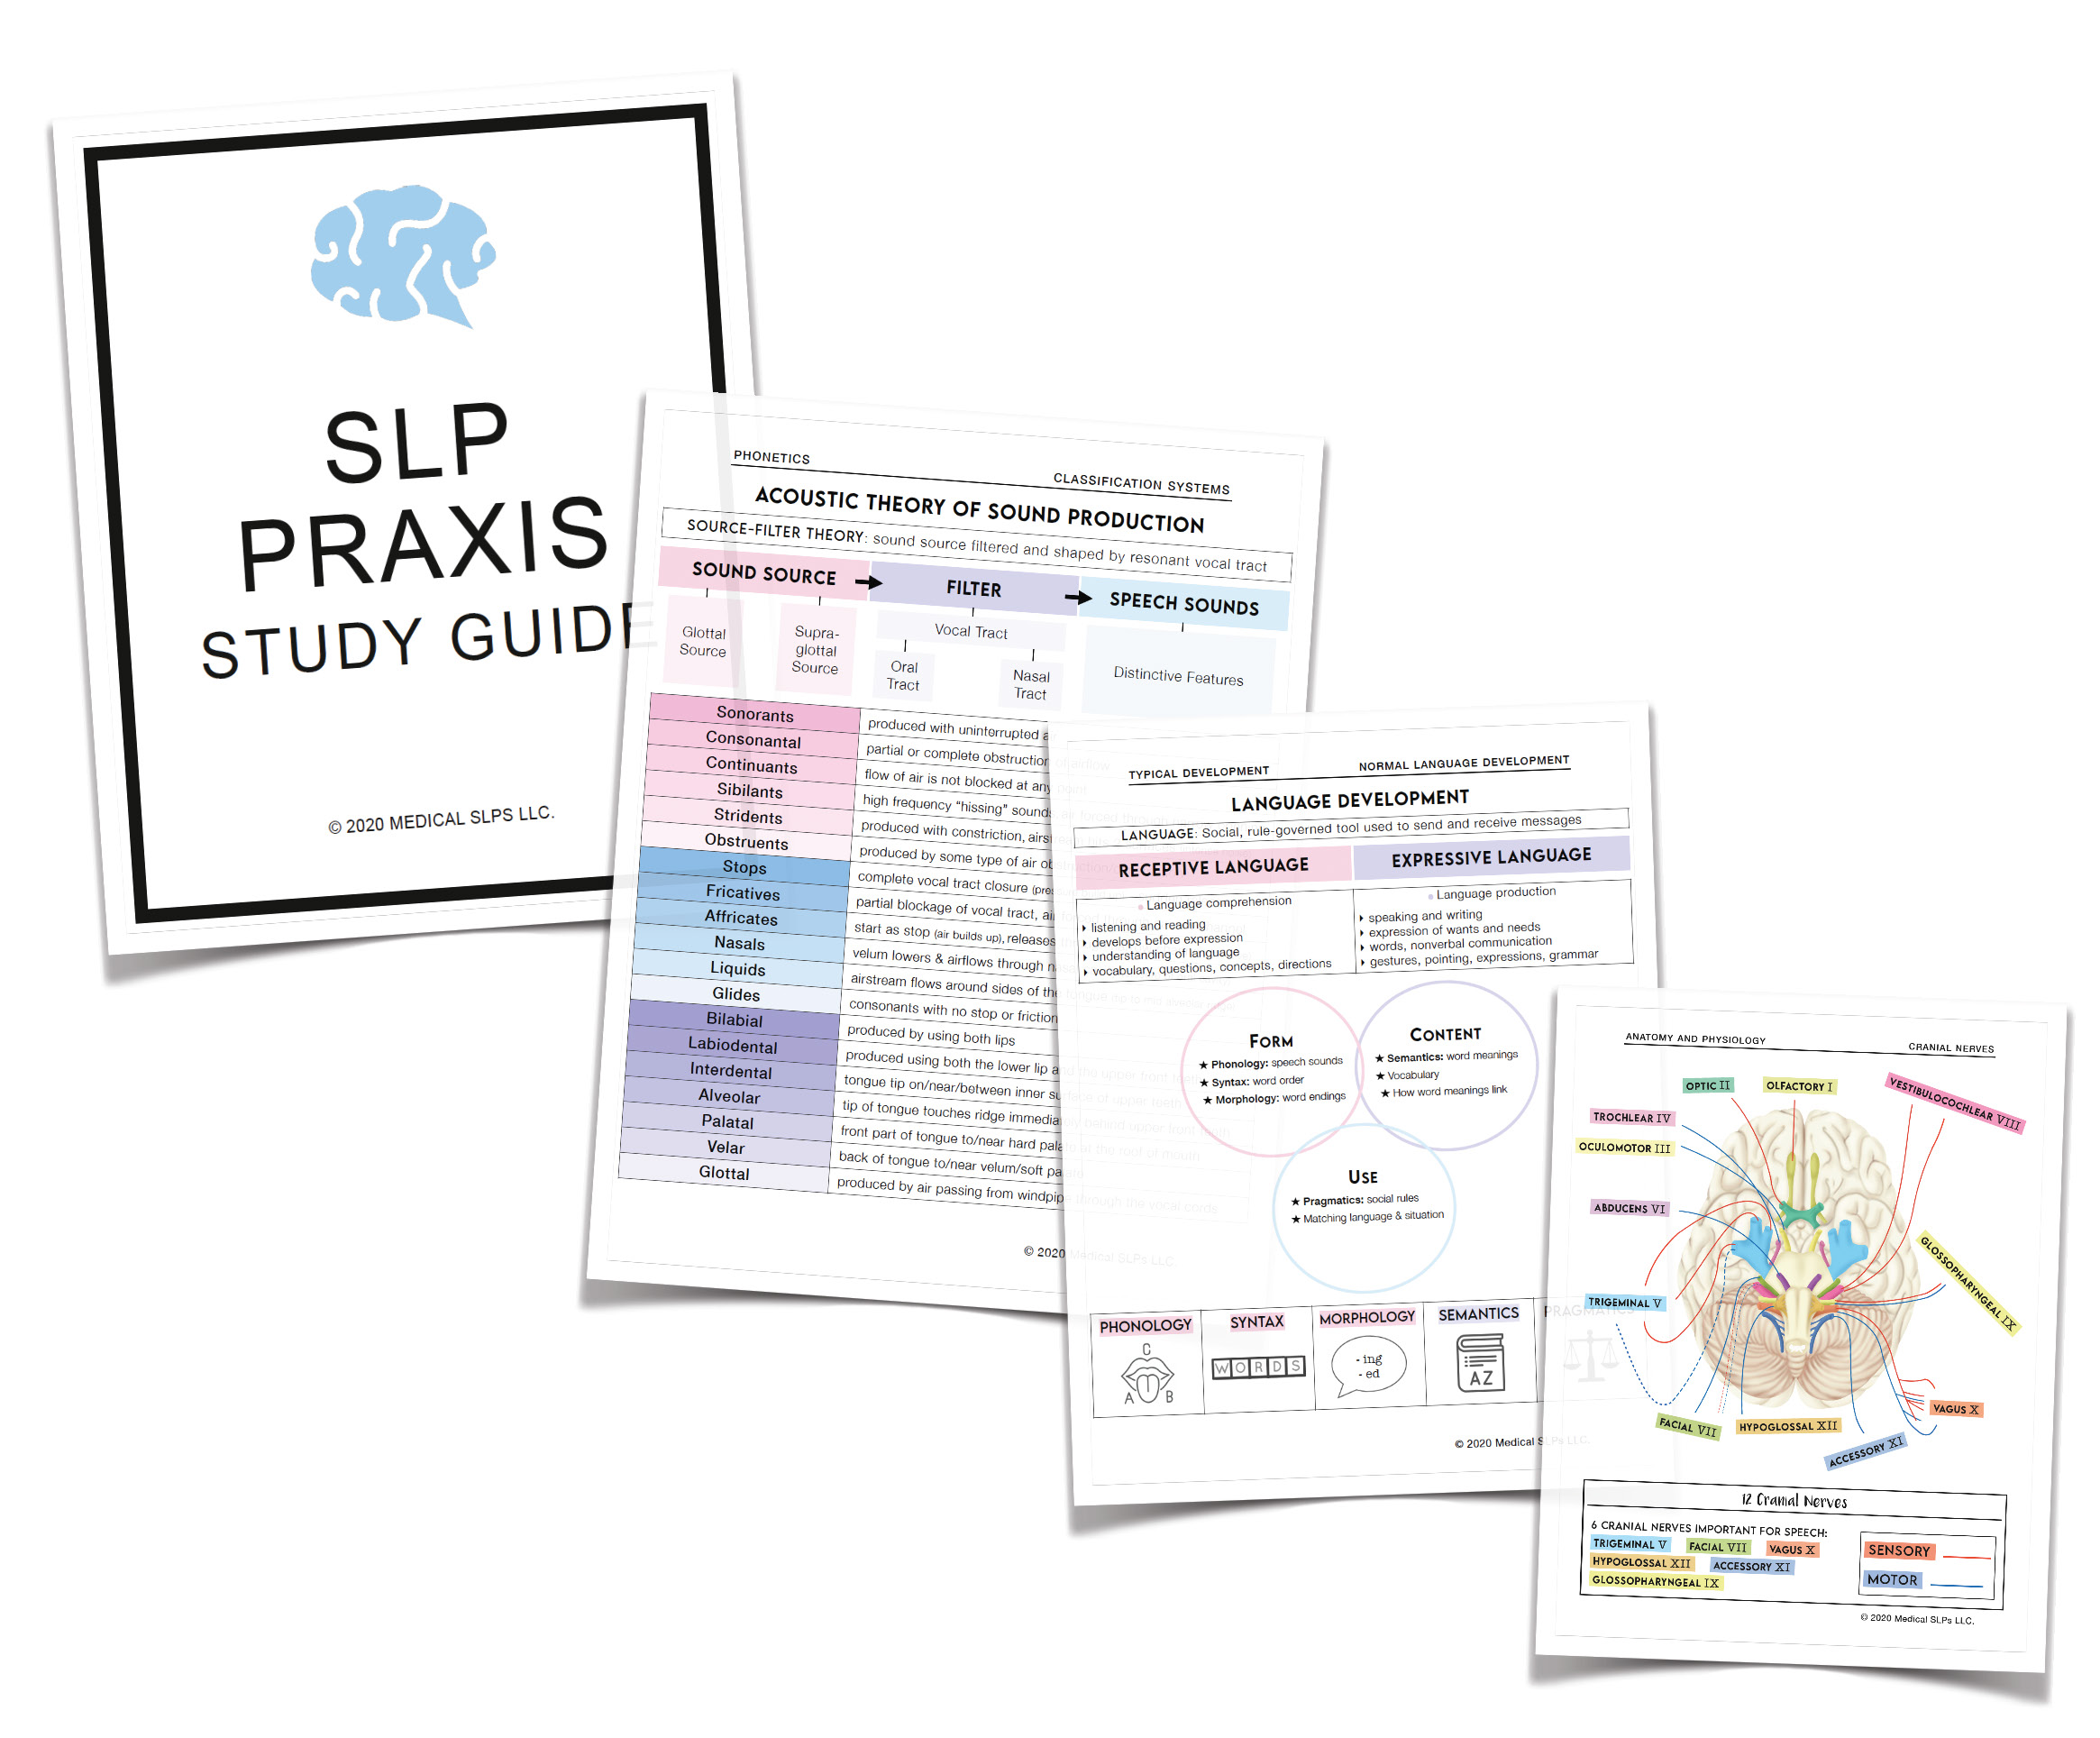 SLP Praxis Study Guide Medical SLPs